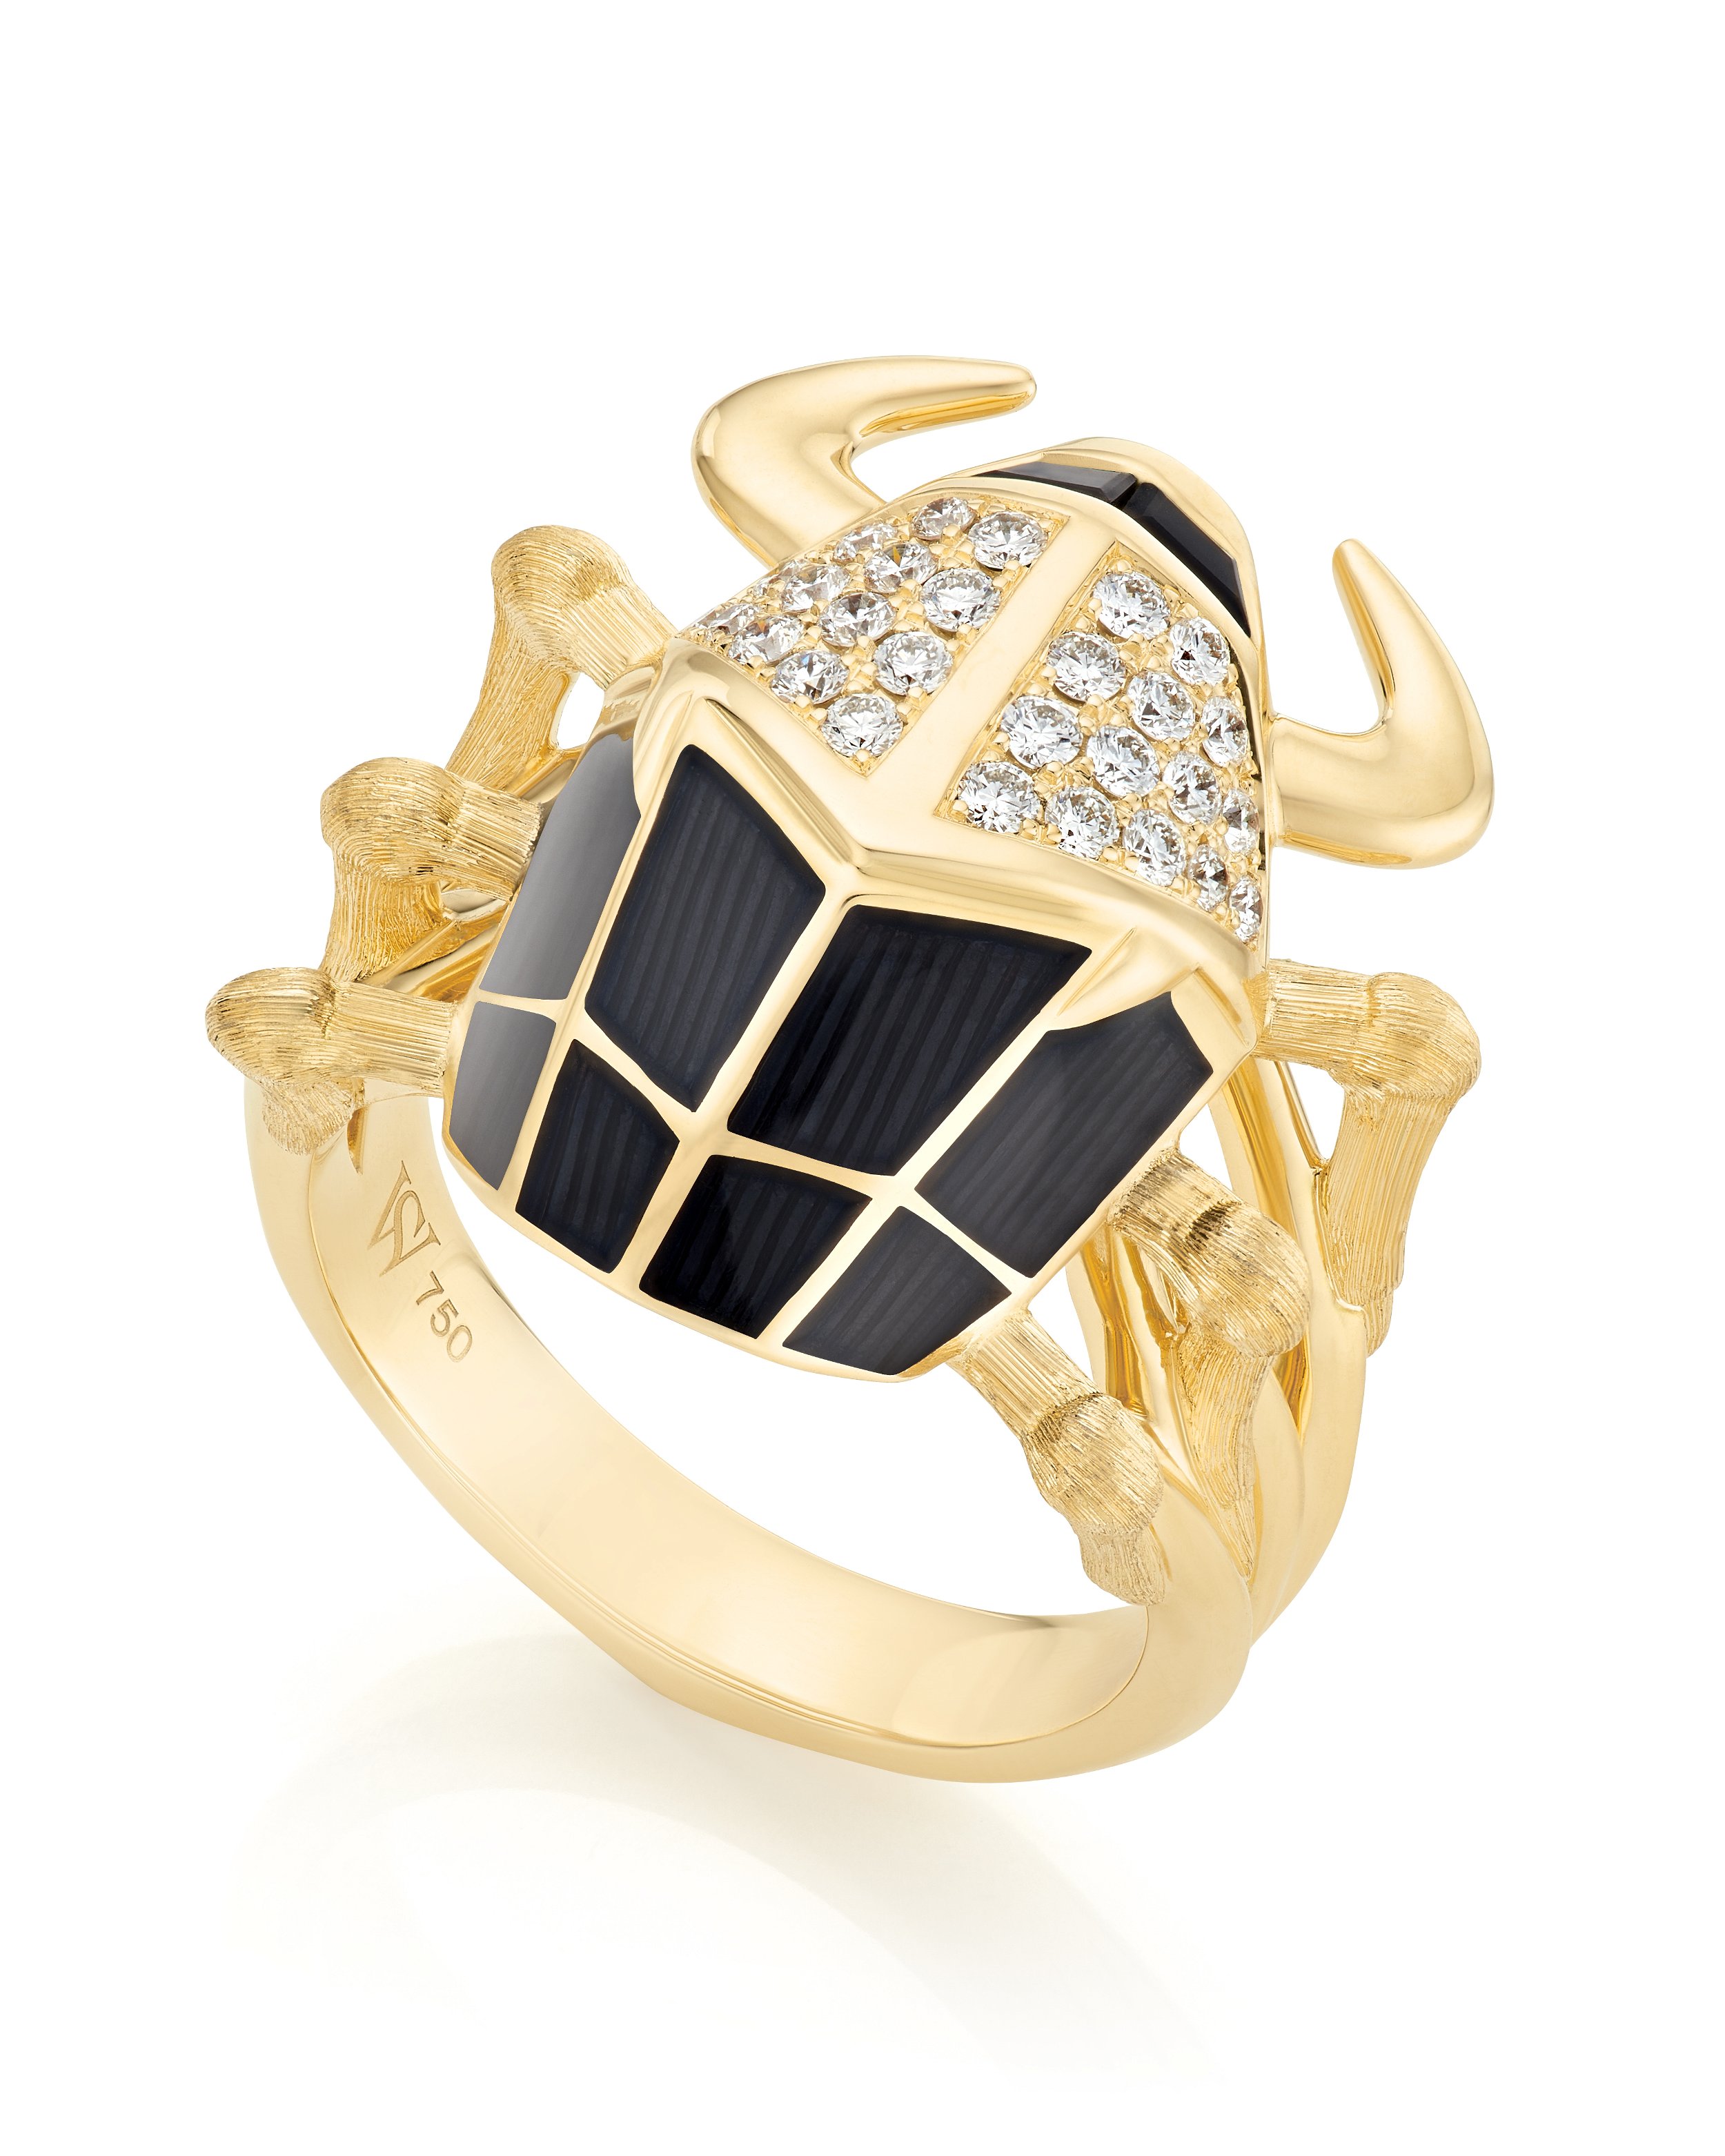 No Regrets Jitterbug Toro Beetle Enamel Ring with White Diamonds, Black Onyx and Enamel in 18kt Yellow Gold - Size 10